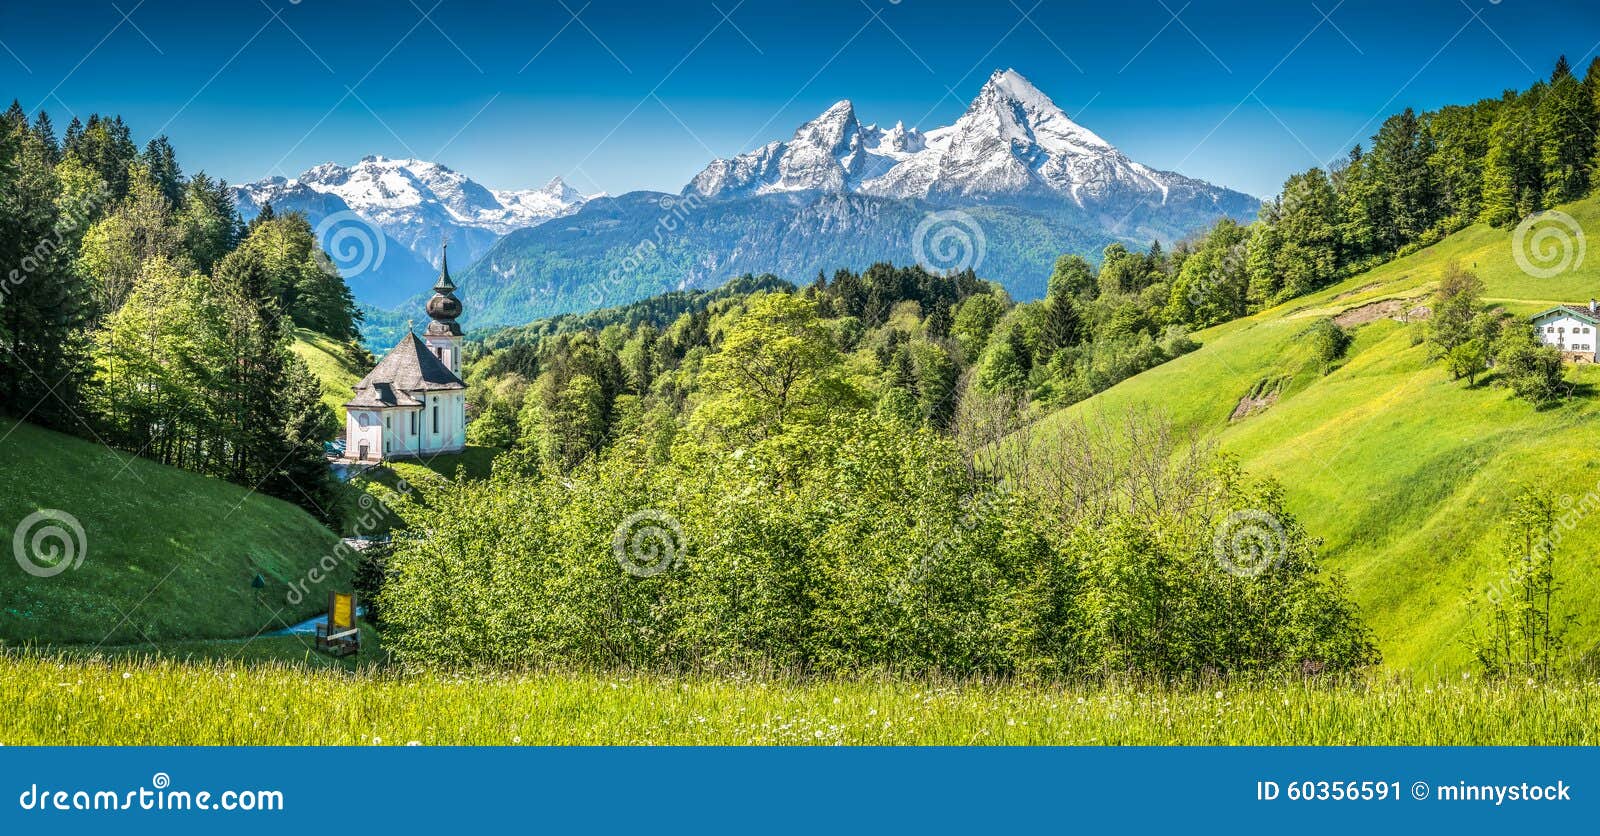 idyllic mountain landscape in the bavarian alps, berchtesgadener land, bavaria, germany